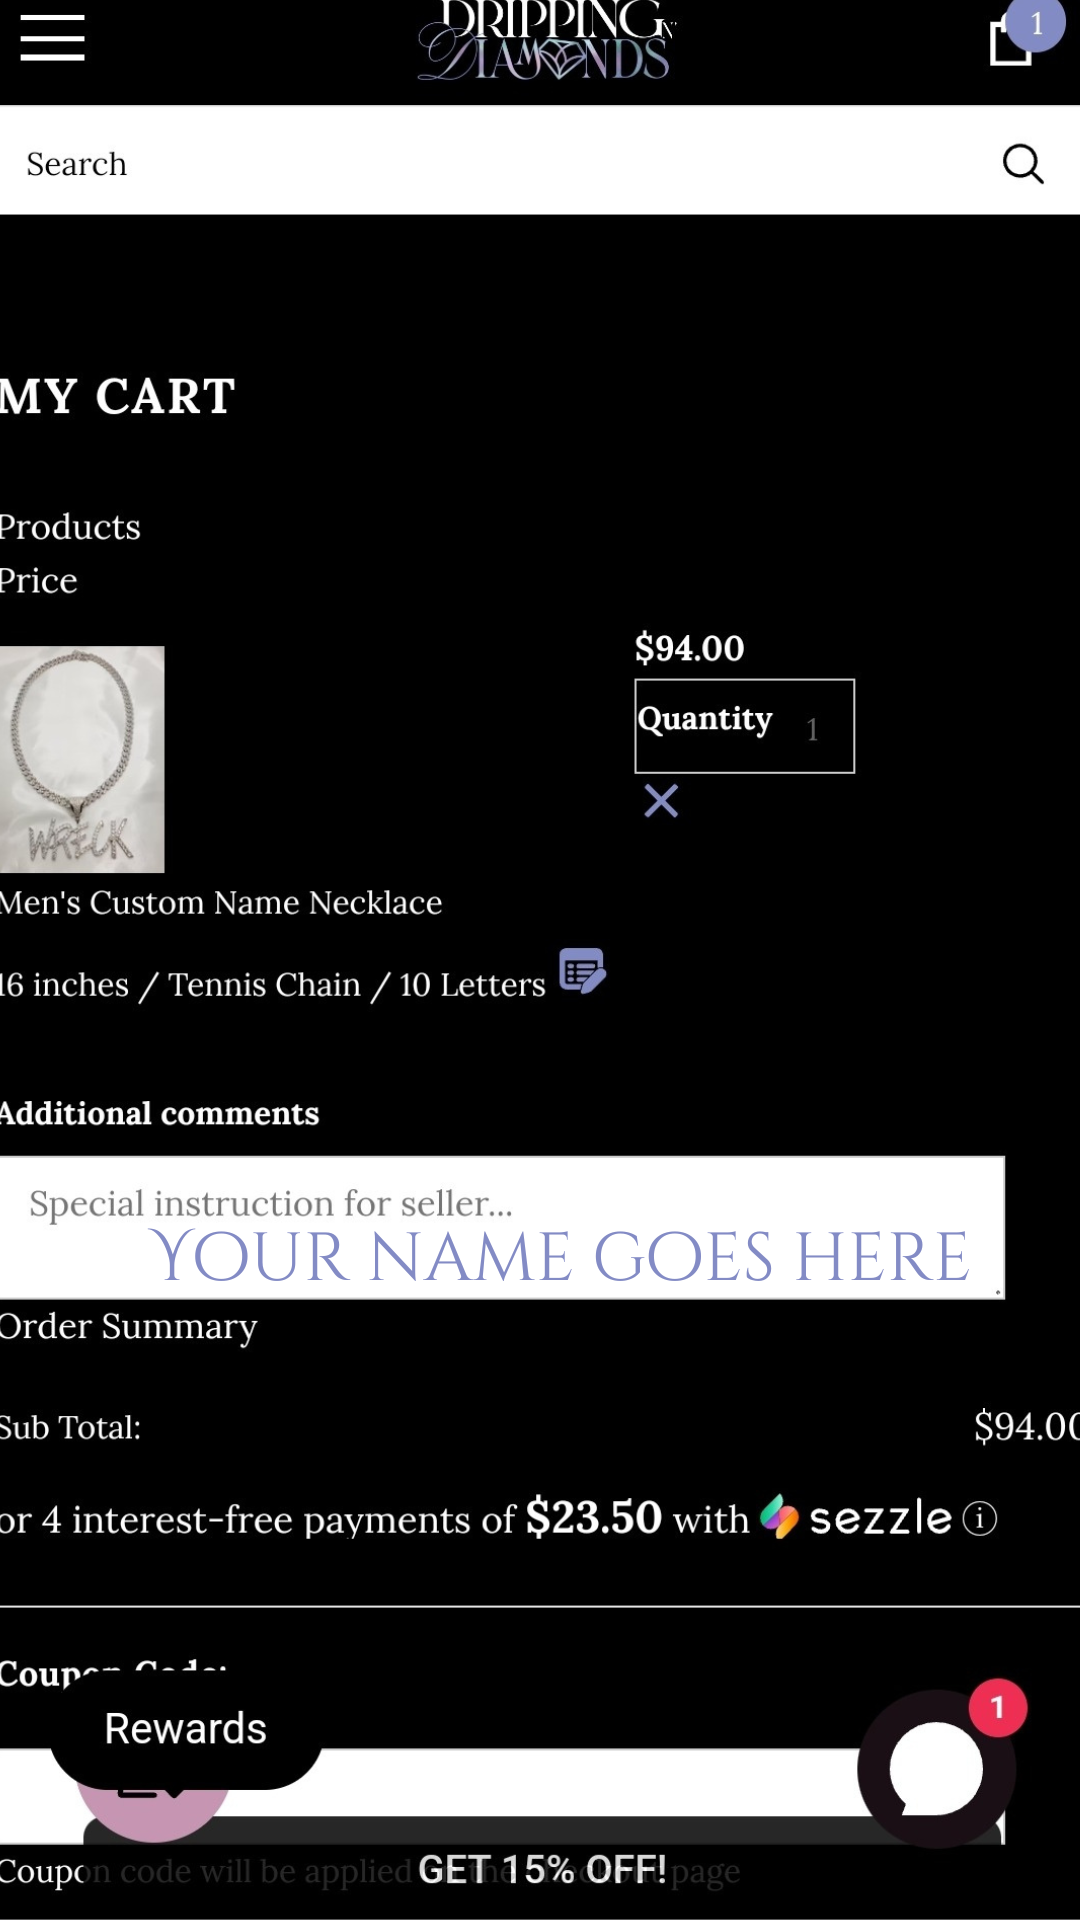 Men's Custom Name Necklace - Dripping N Diamonds